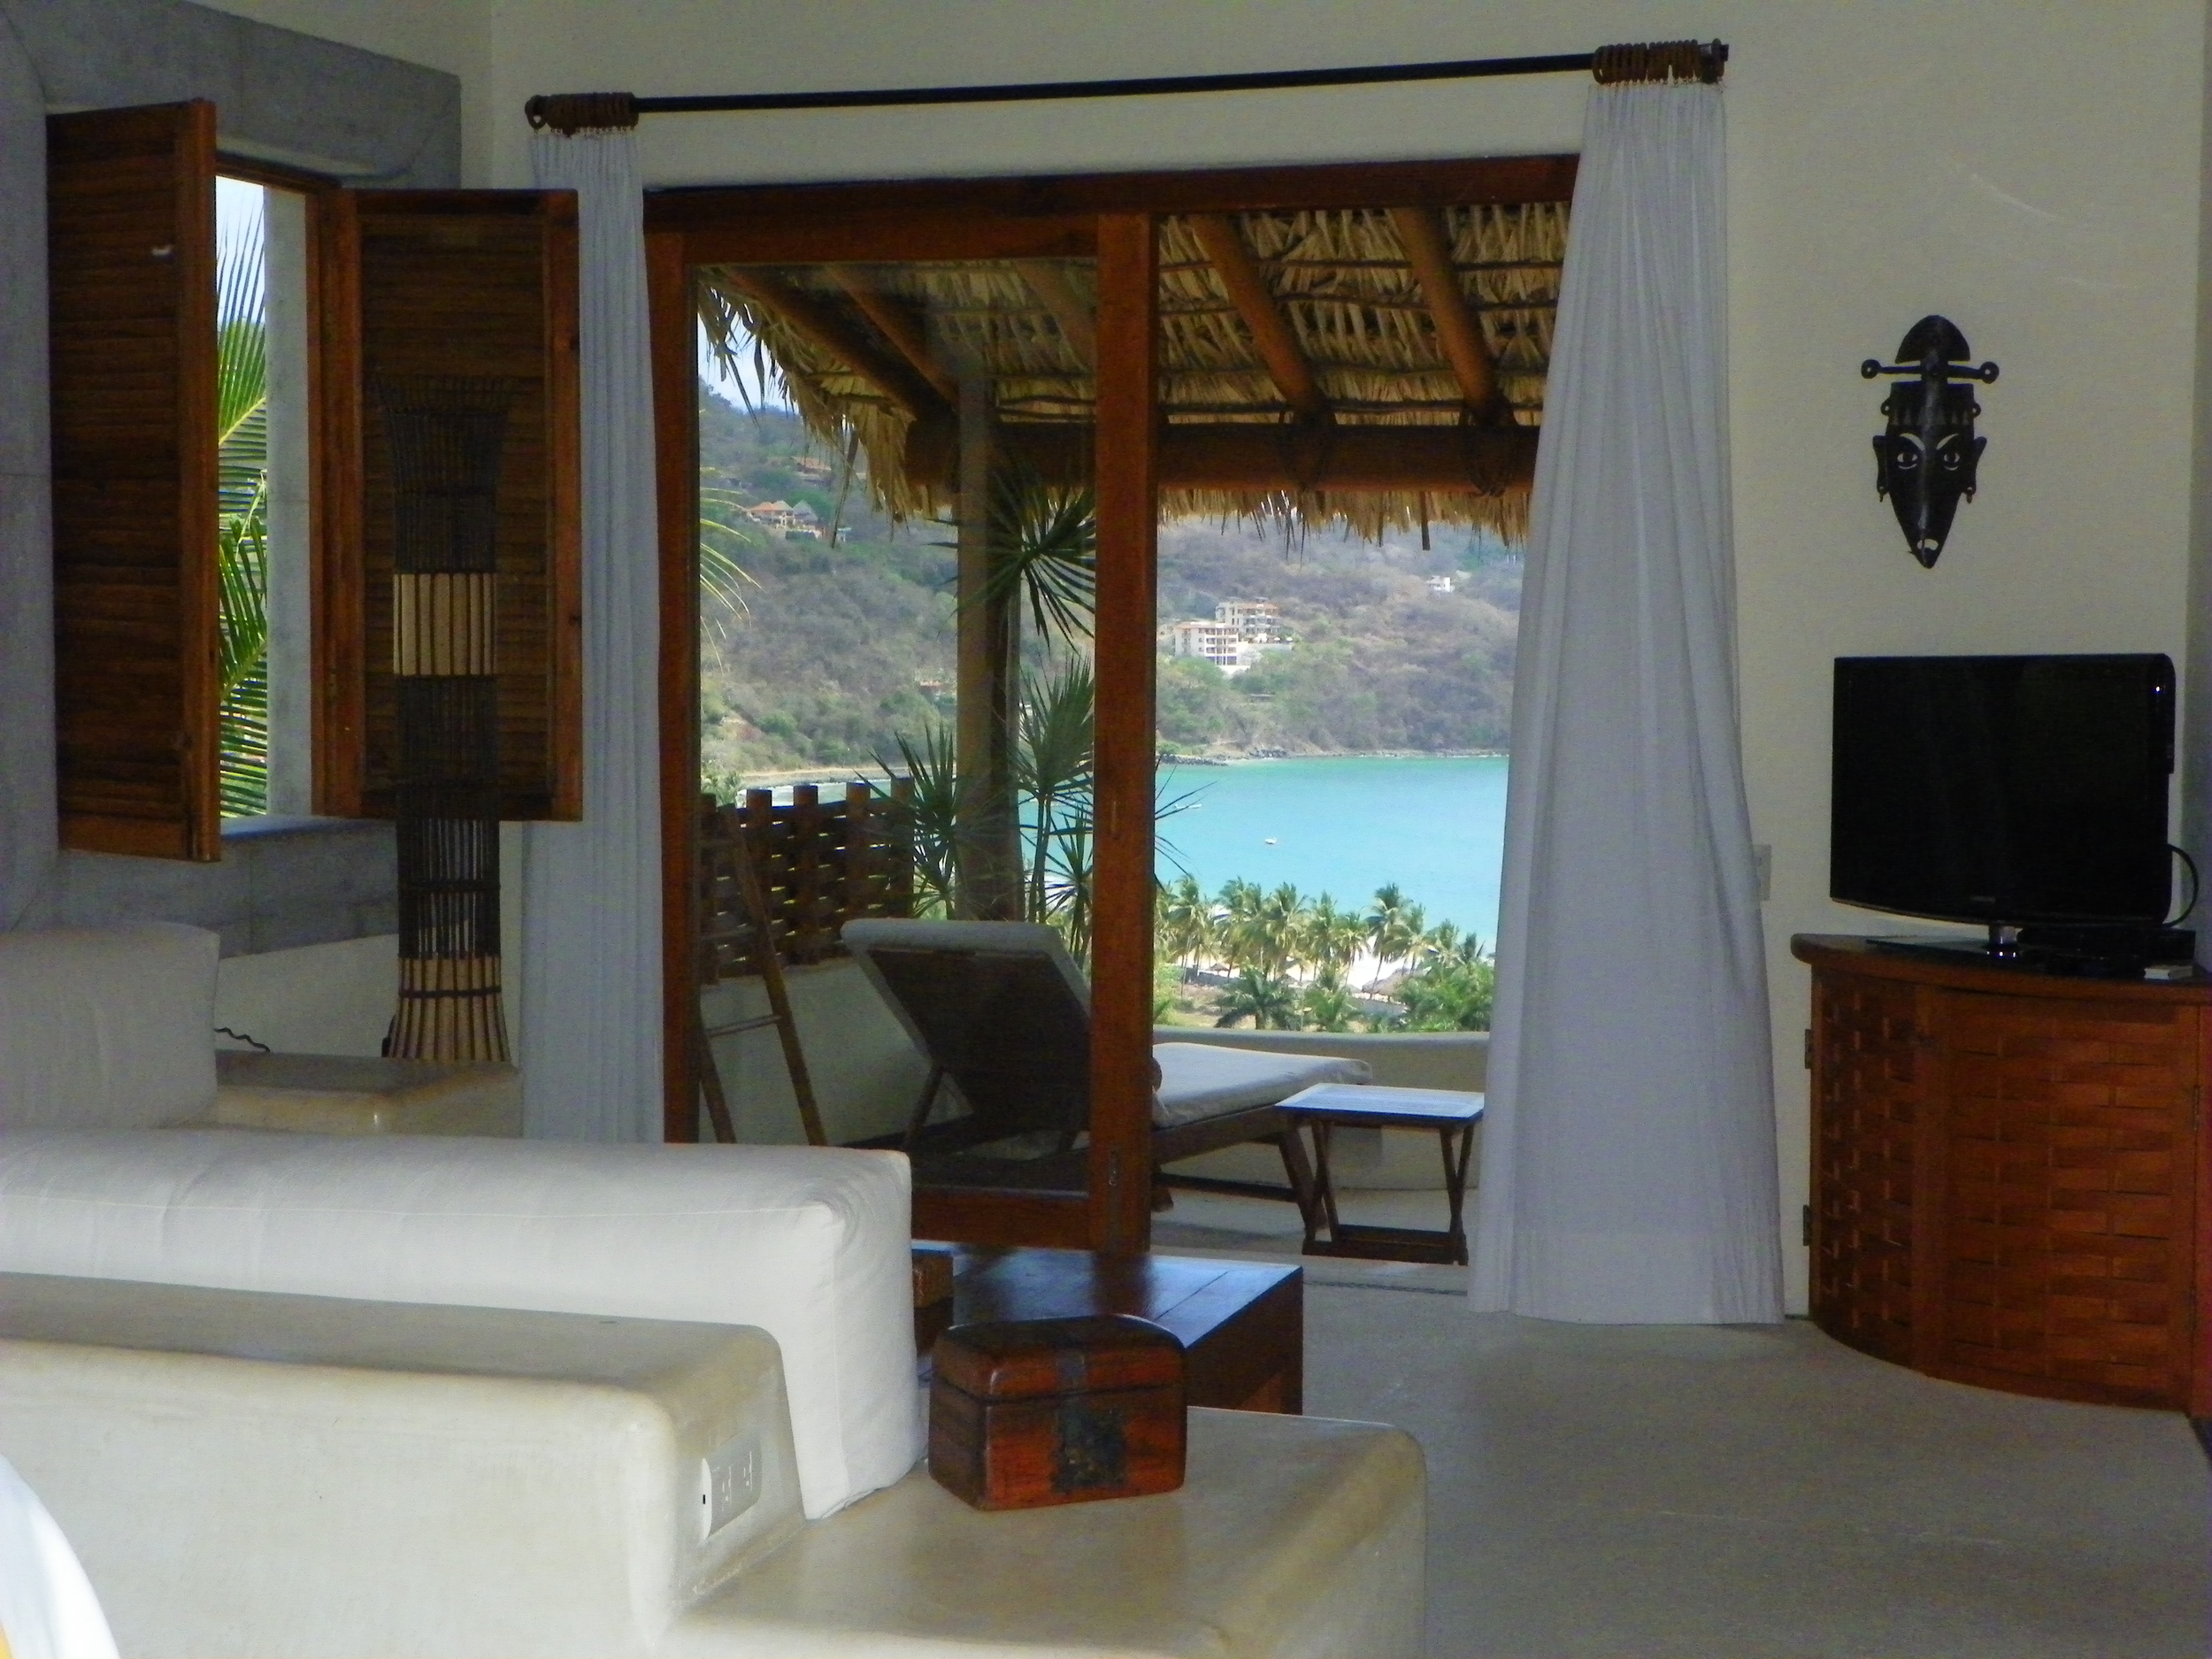 pool-view-cinco-sentidos-hotel-zihuatanejo-mexico-properties-homes-for-sale.jpeg